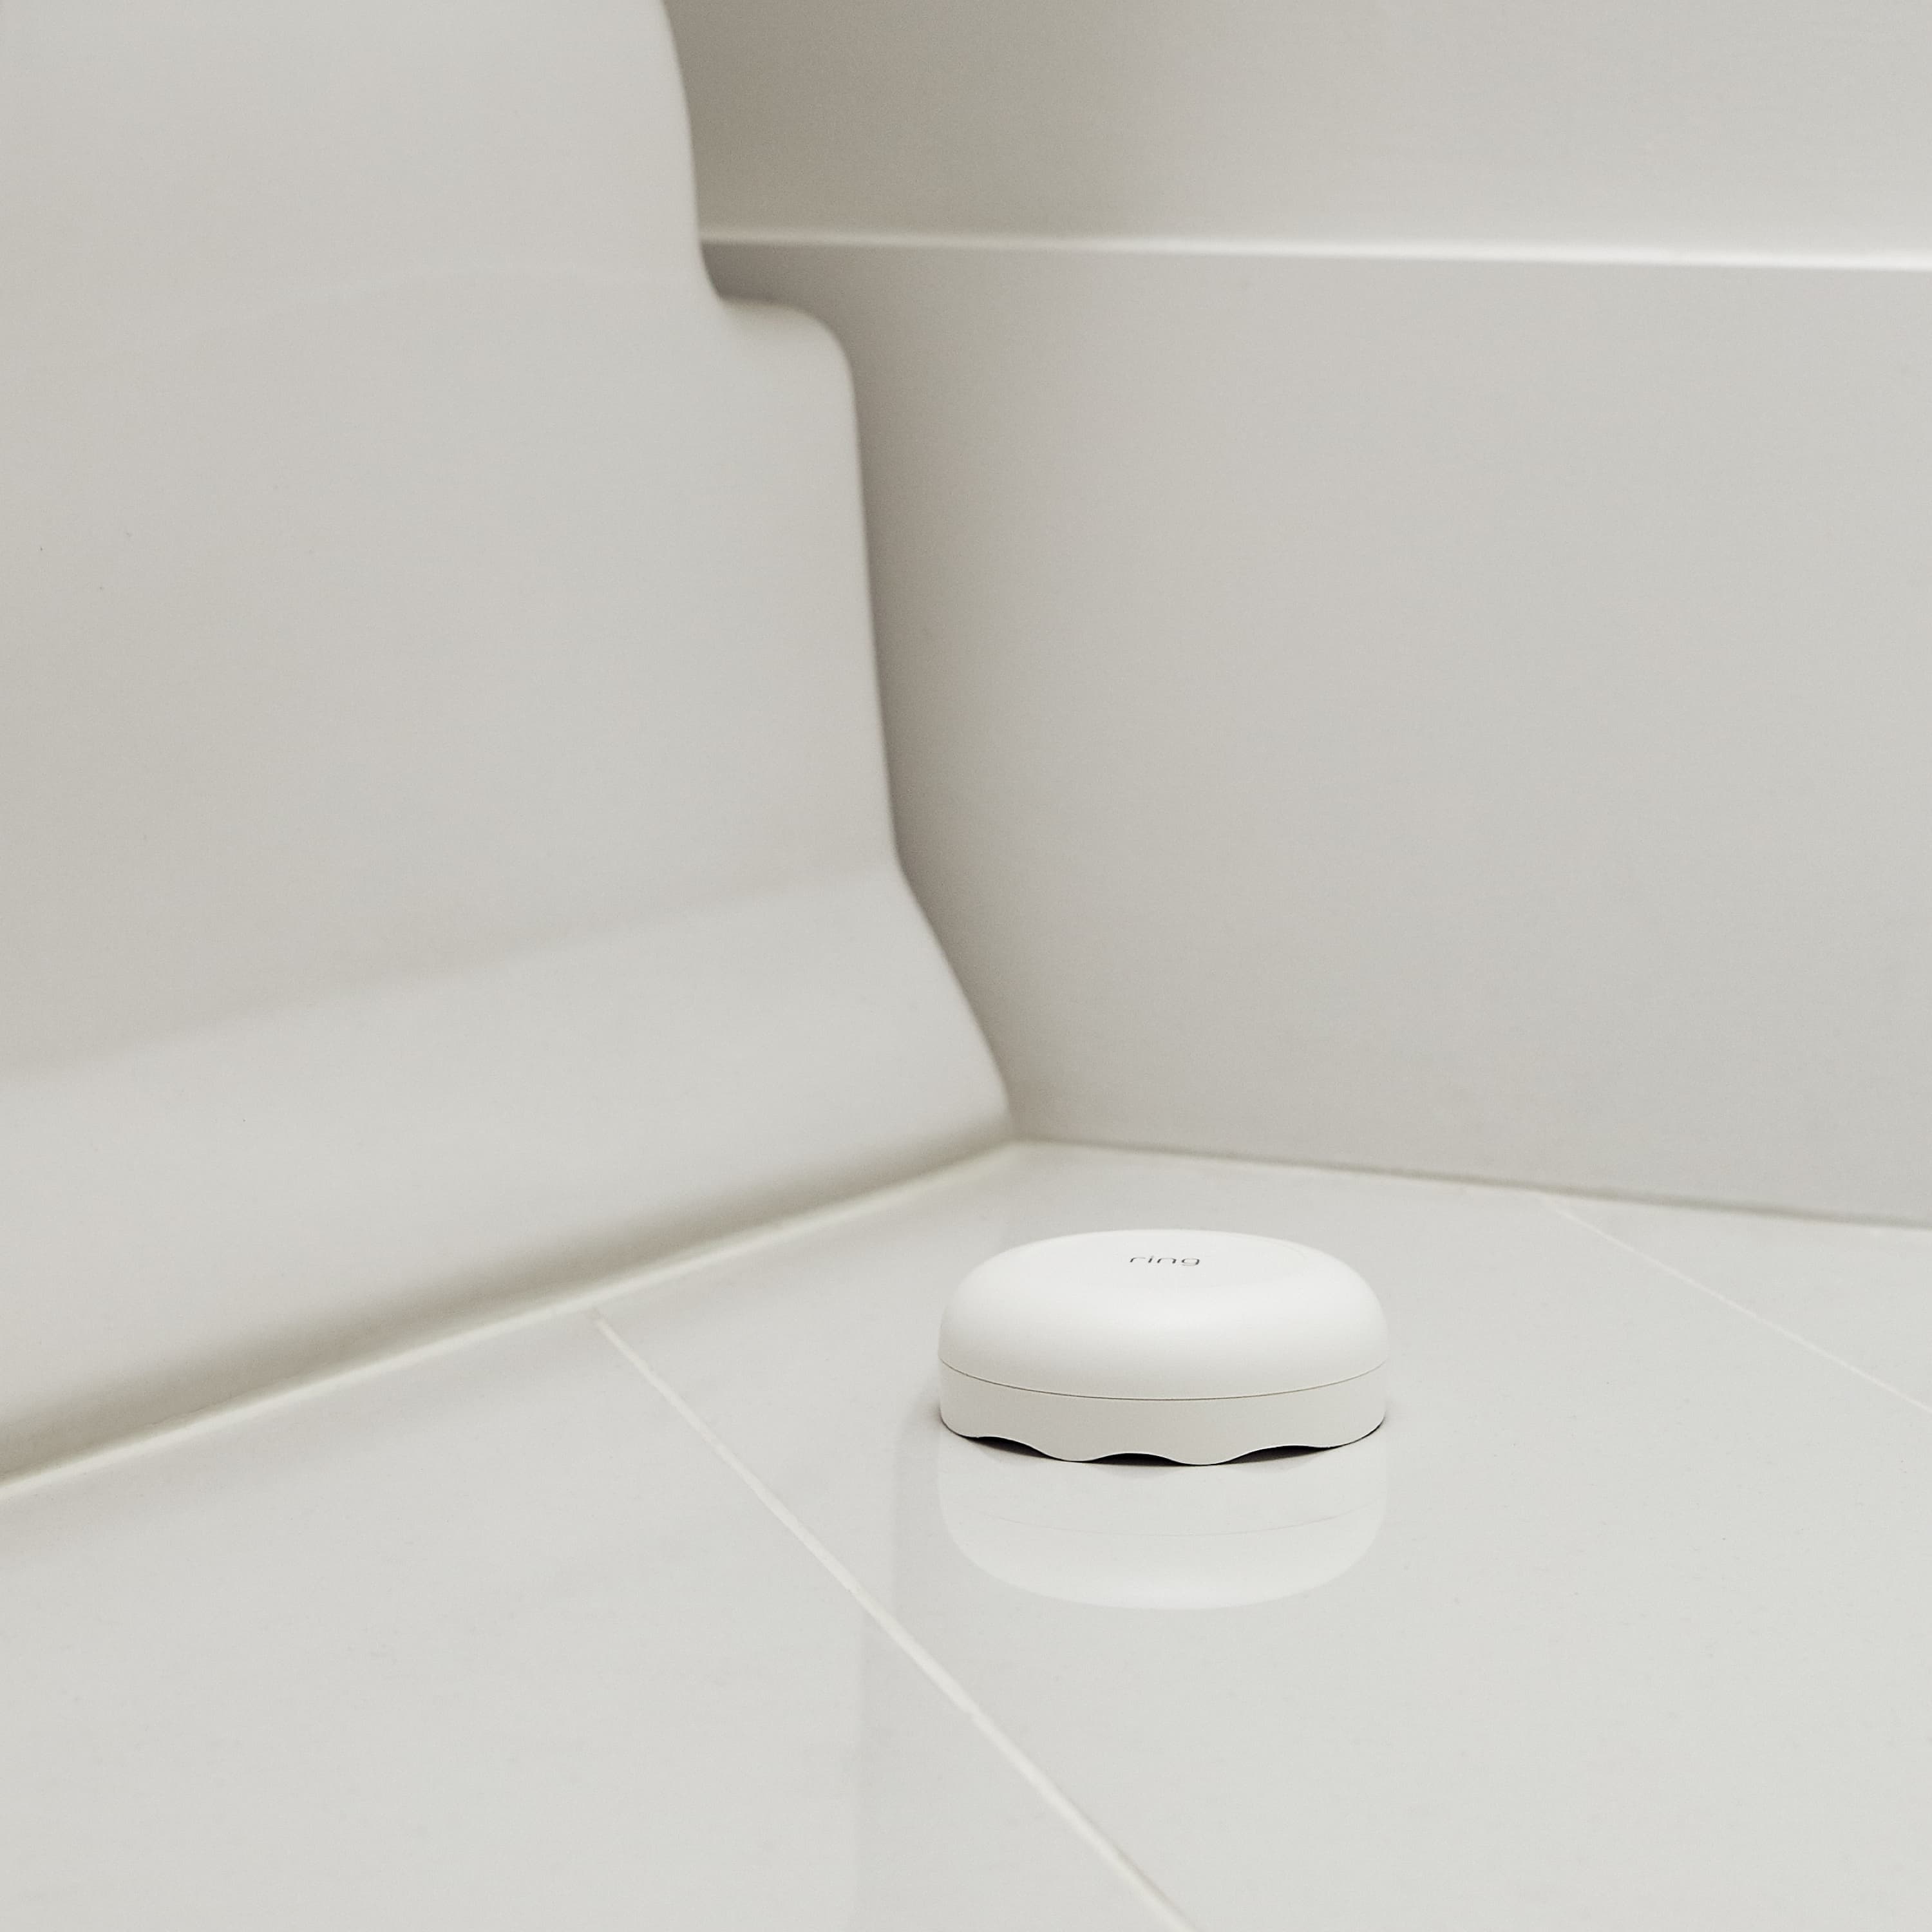 Alarm Flood & Freeze Sensor - Alarm Flood and Freeze Sensor situated on the tiled floor of a bathroom. 